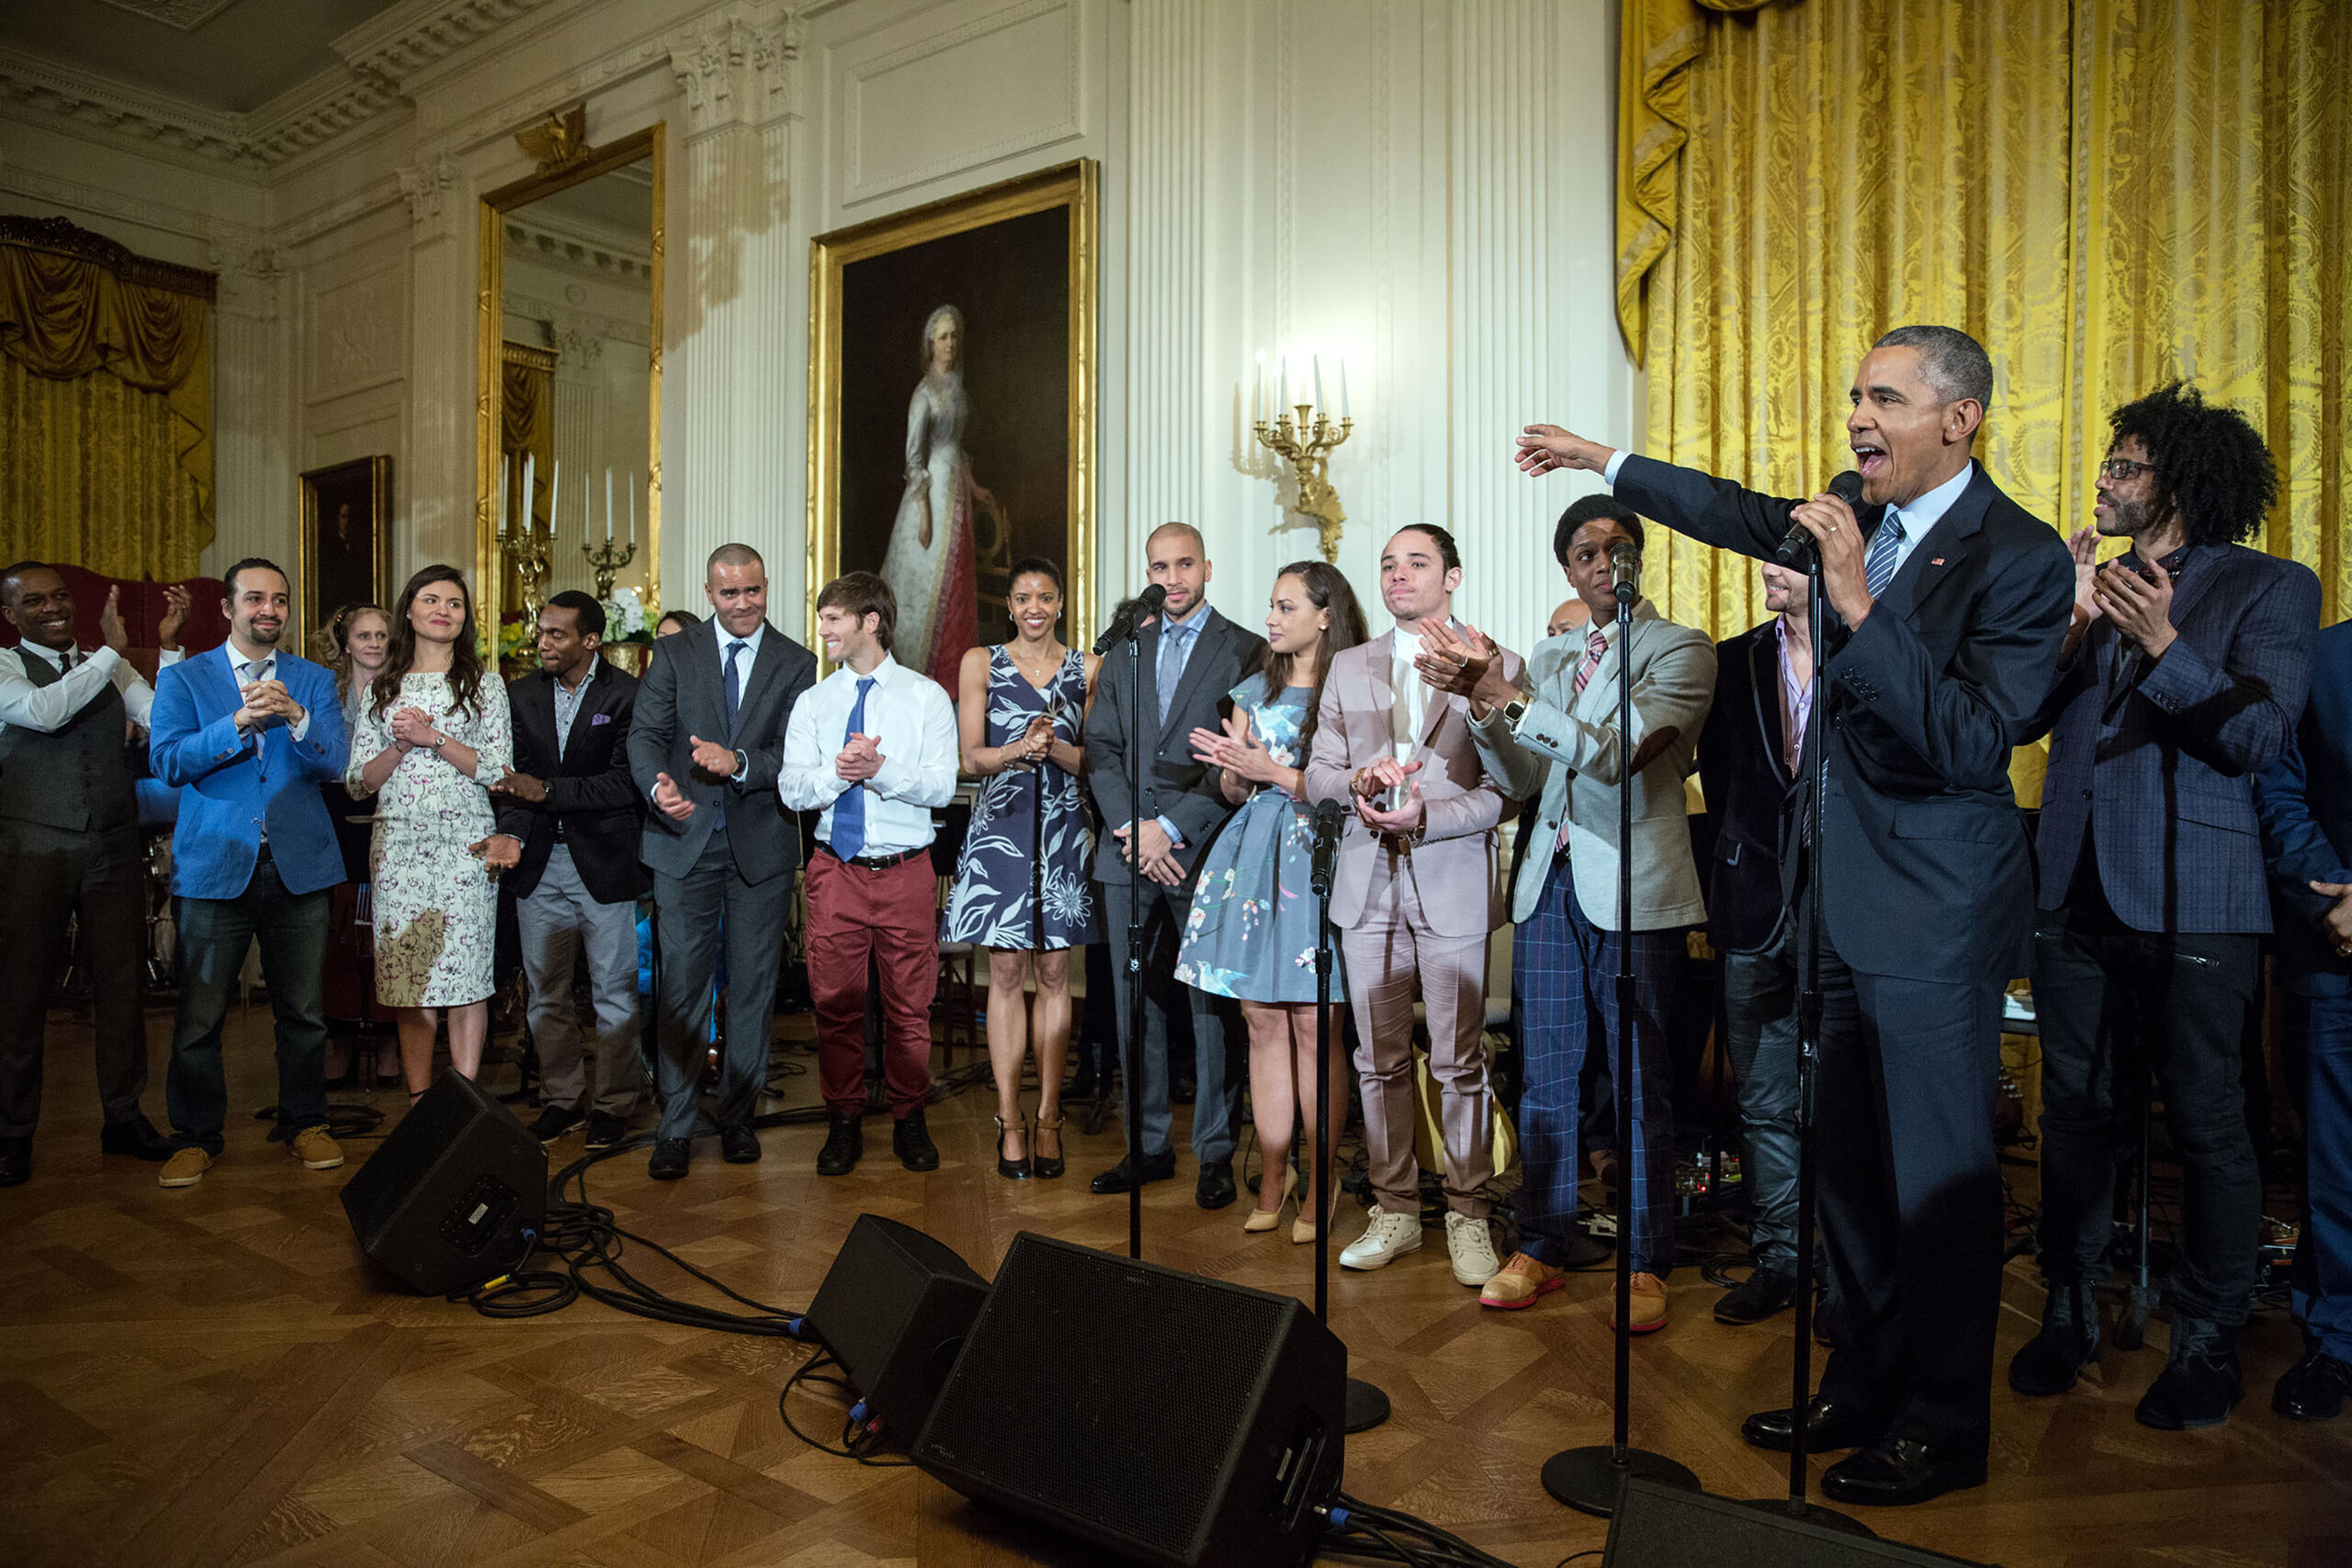 Performing Hamilton at the White House